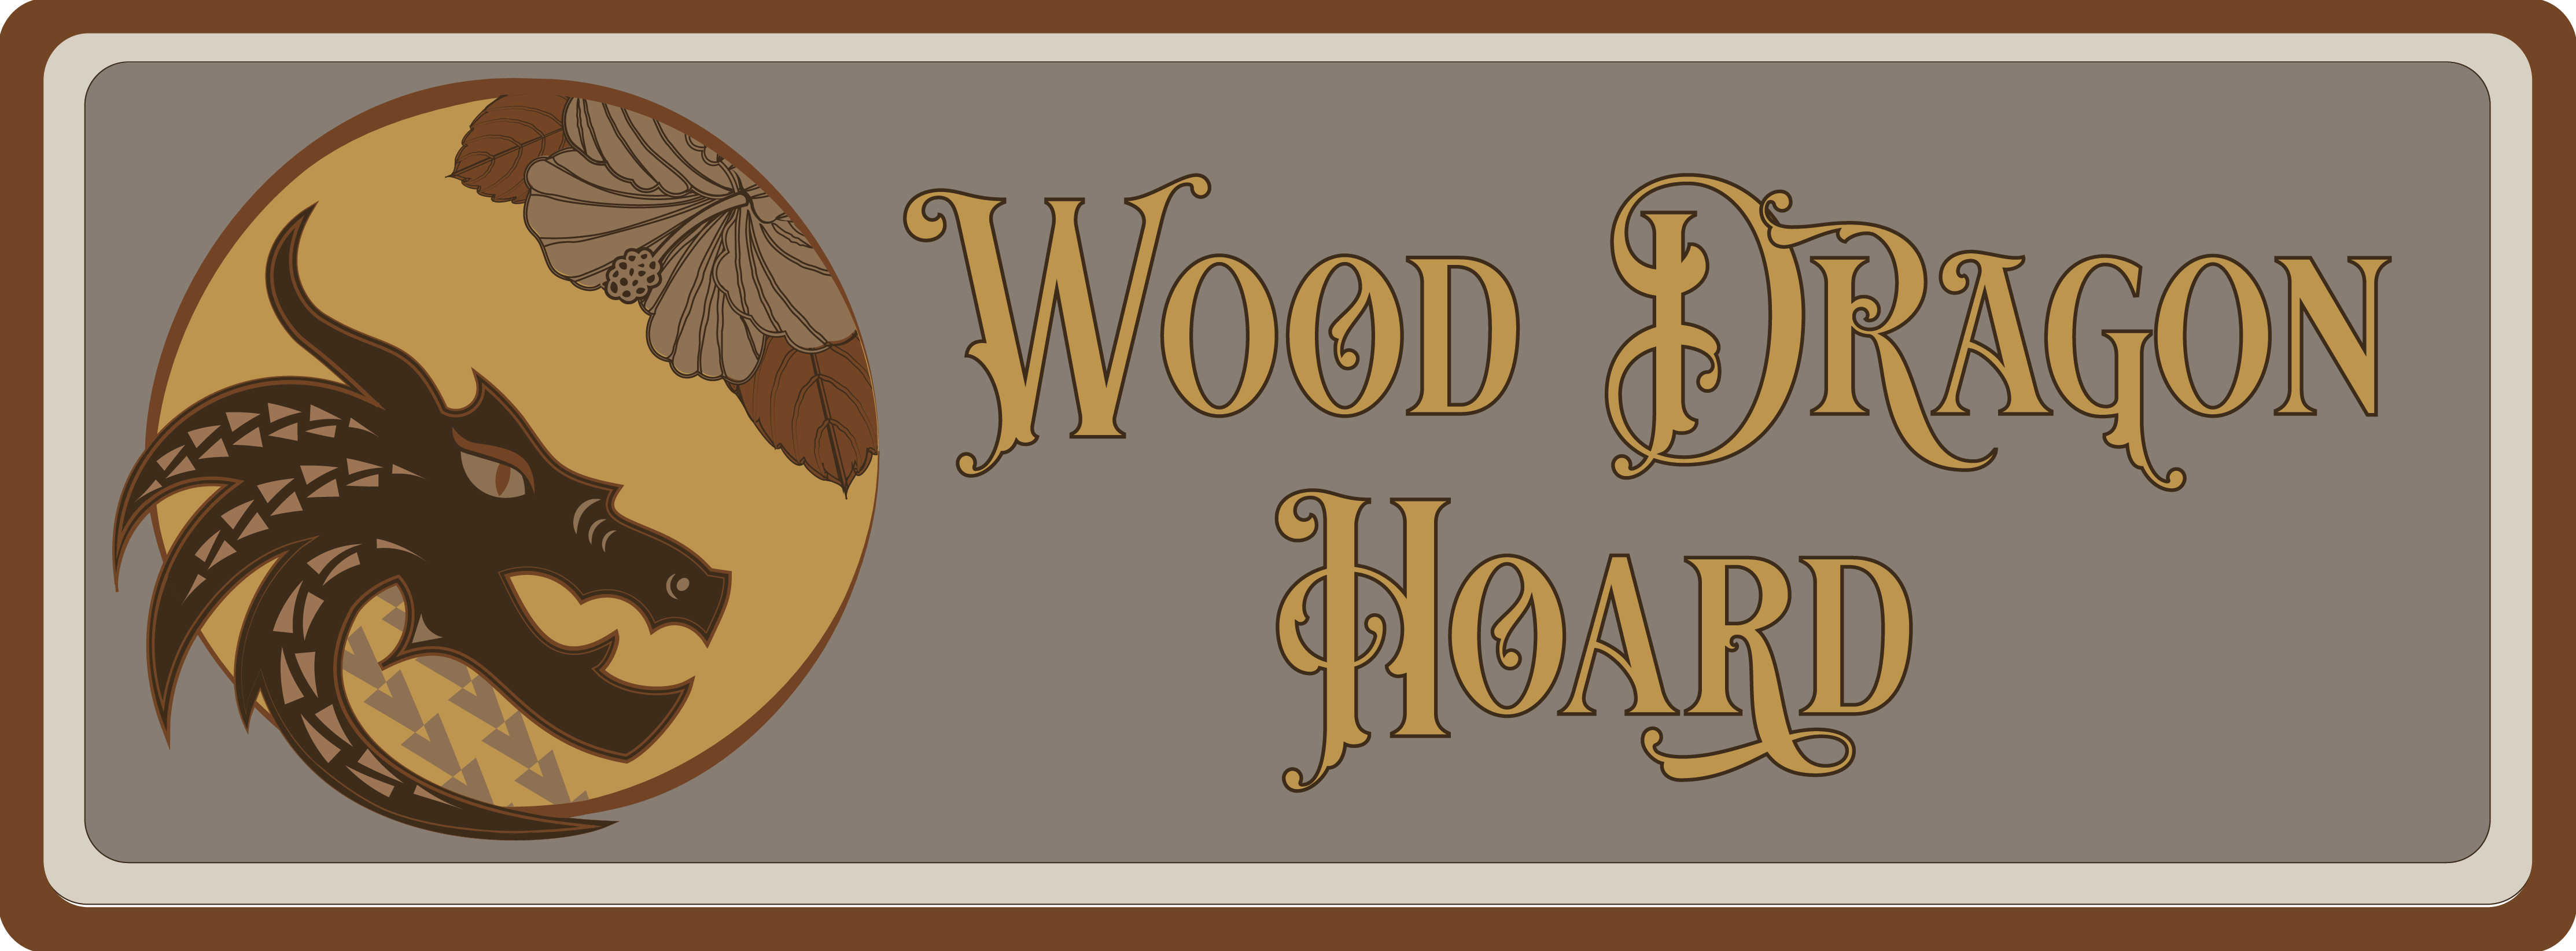 Wood Dragon Hoard logo